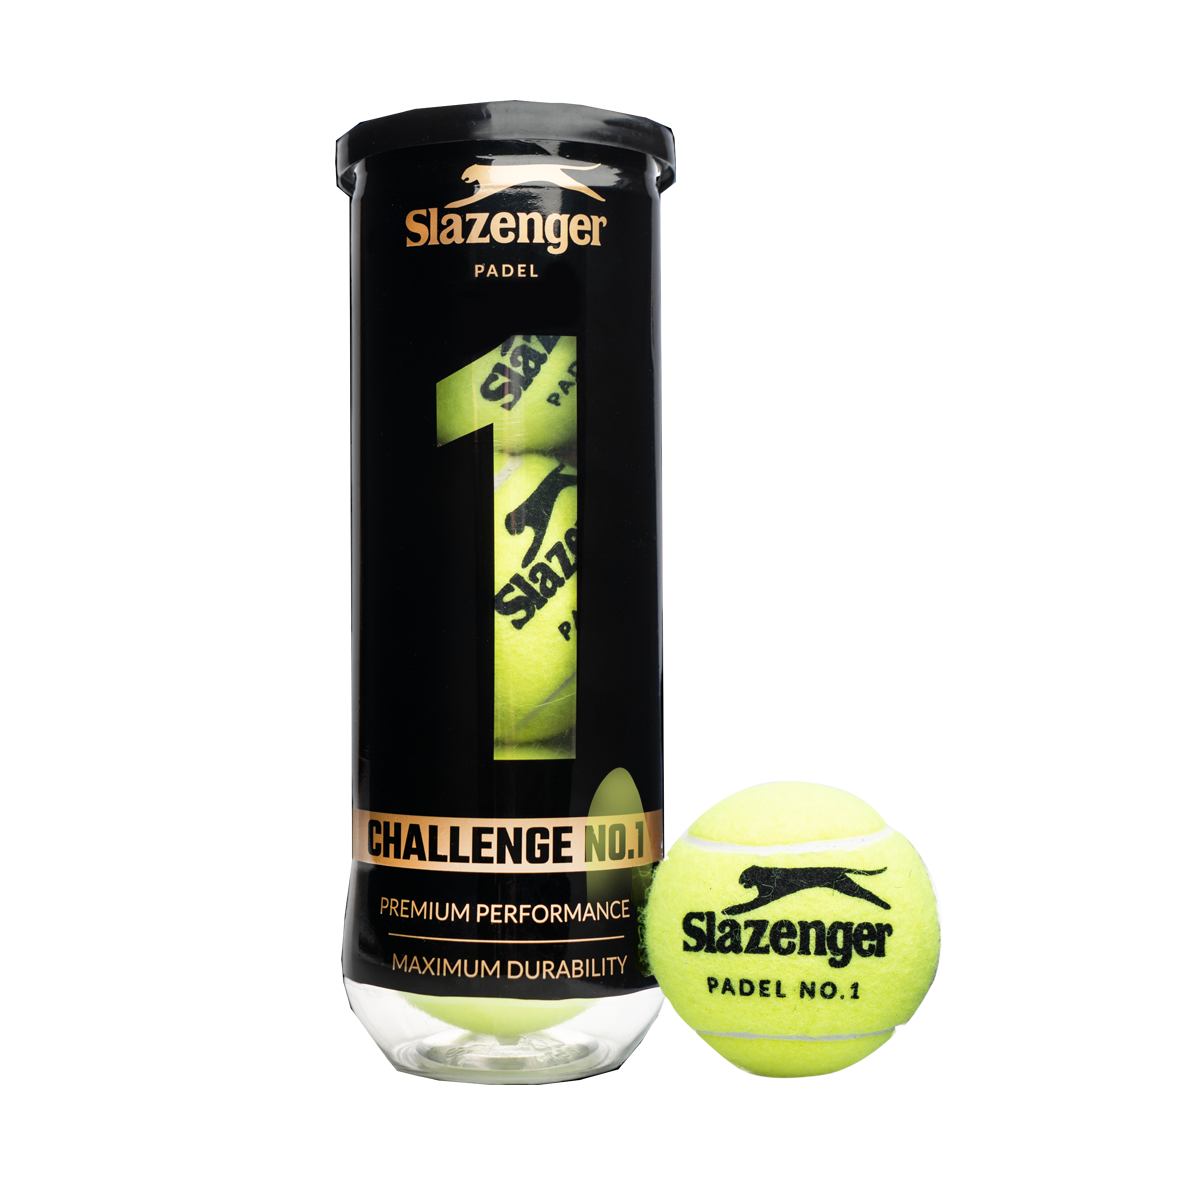 Slazenger No.1 padel ball